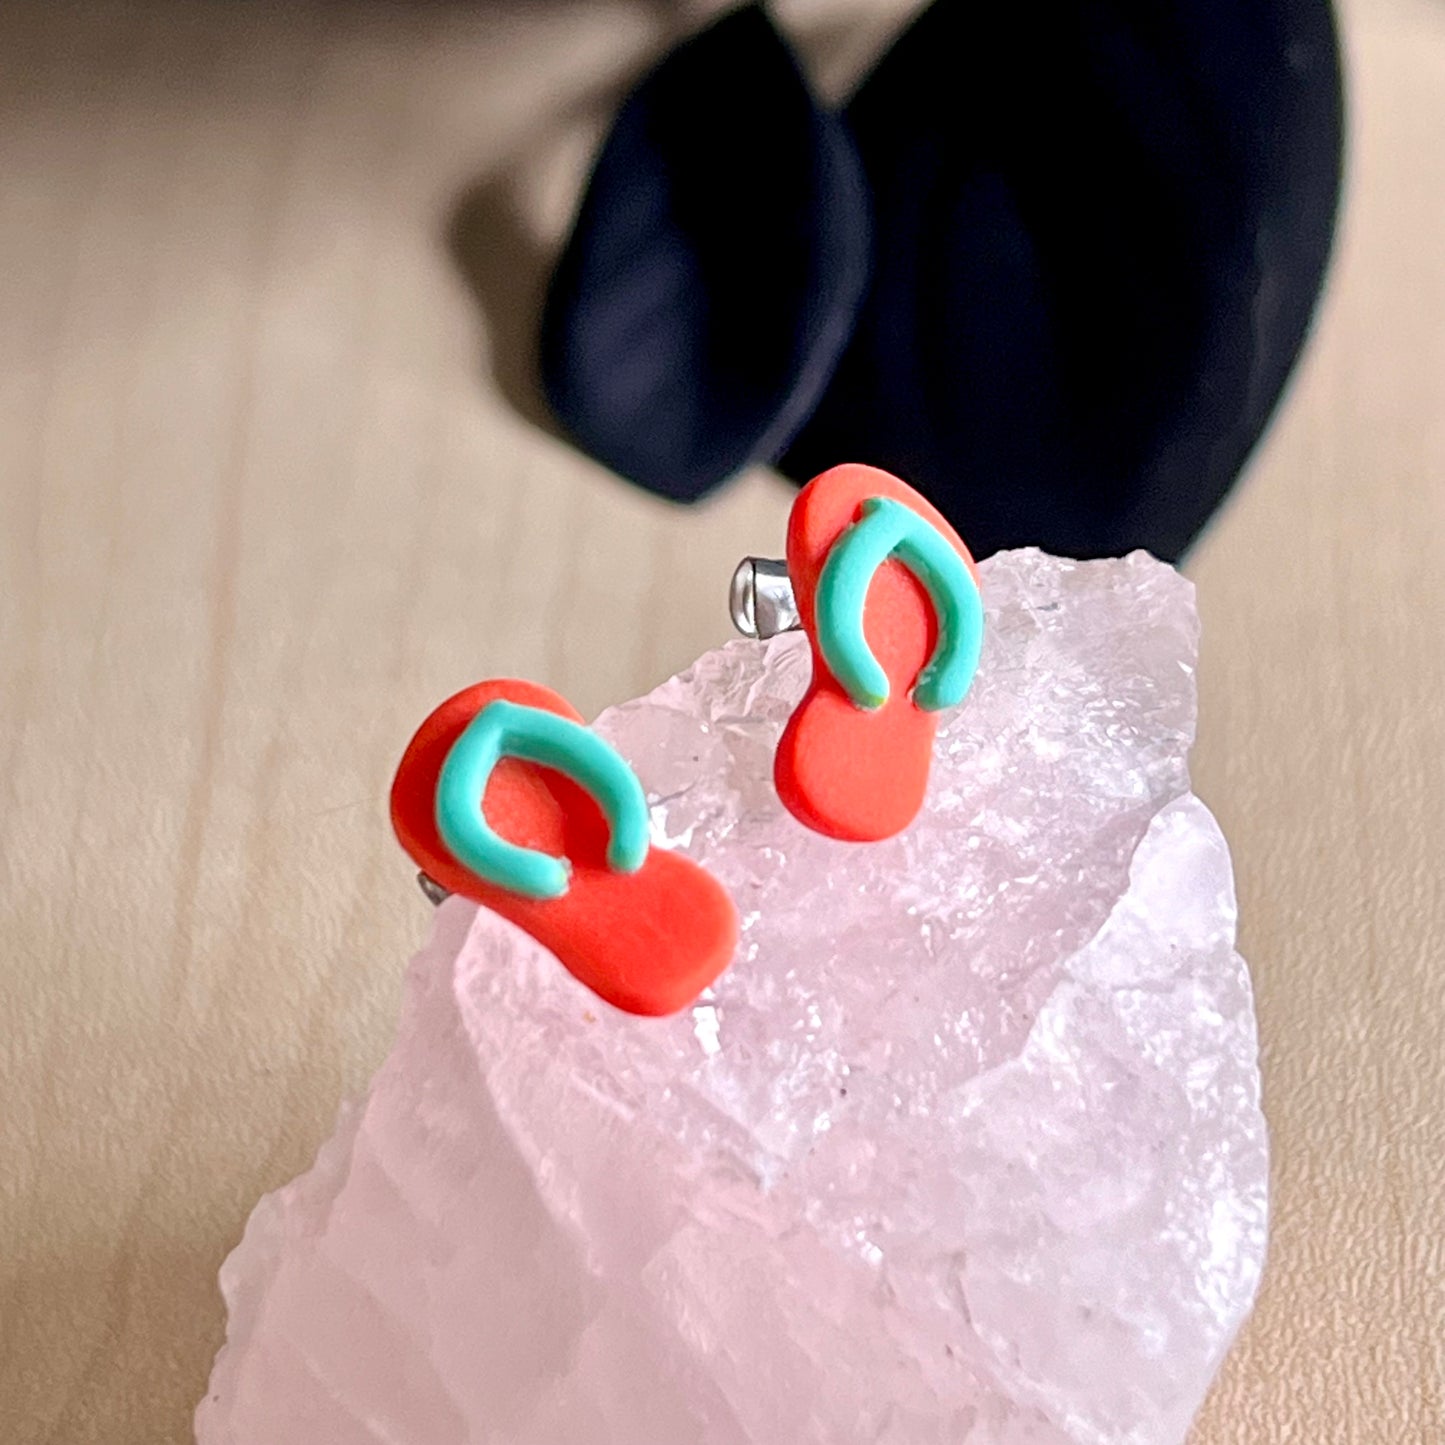 Thongs / flip flops studs, orange with Fiji blue, handmade earrings